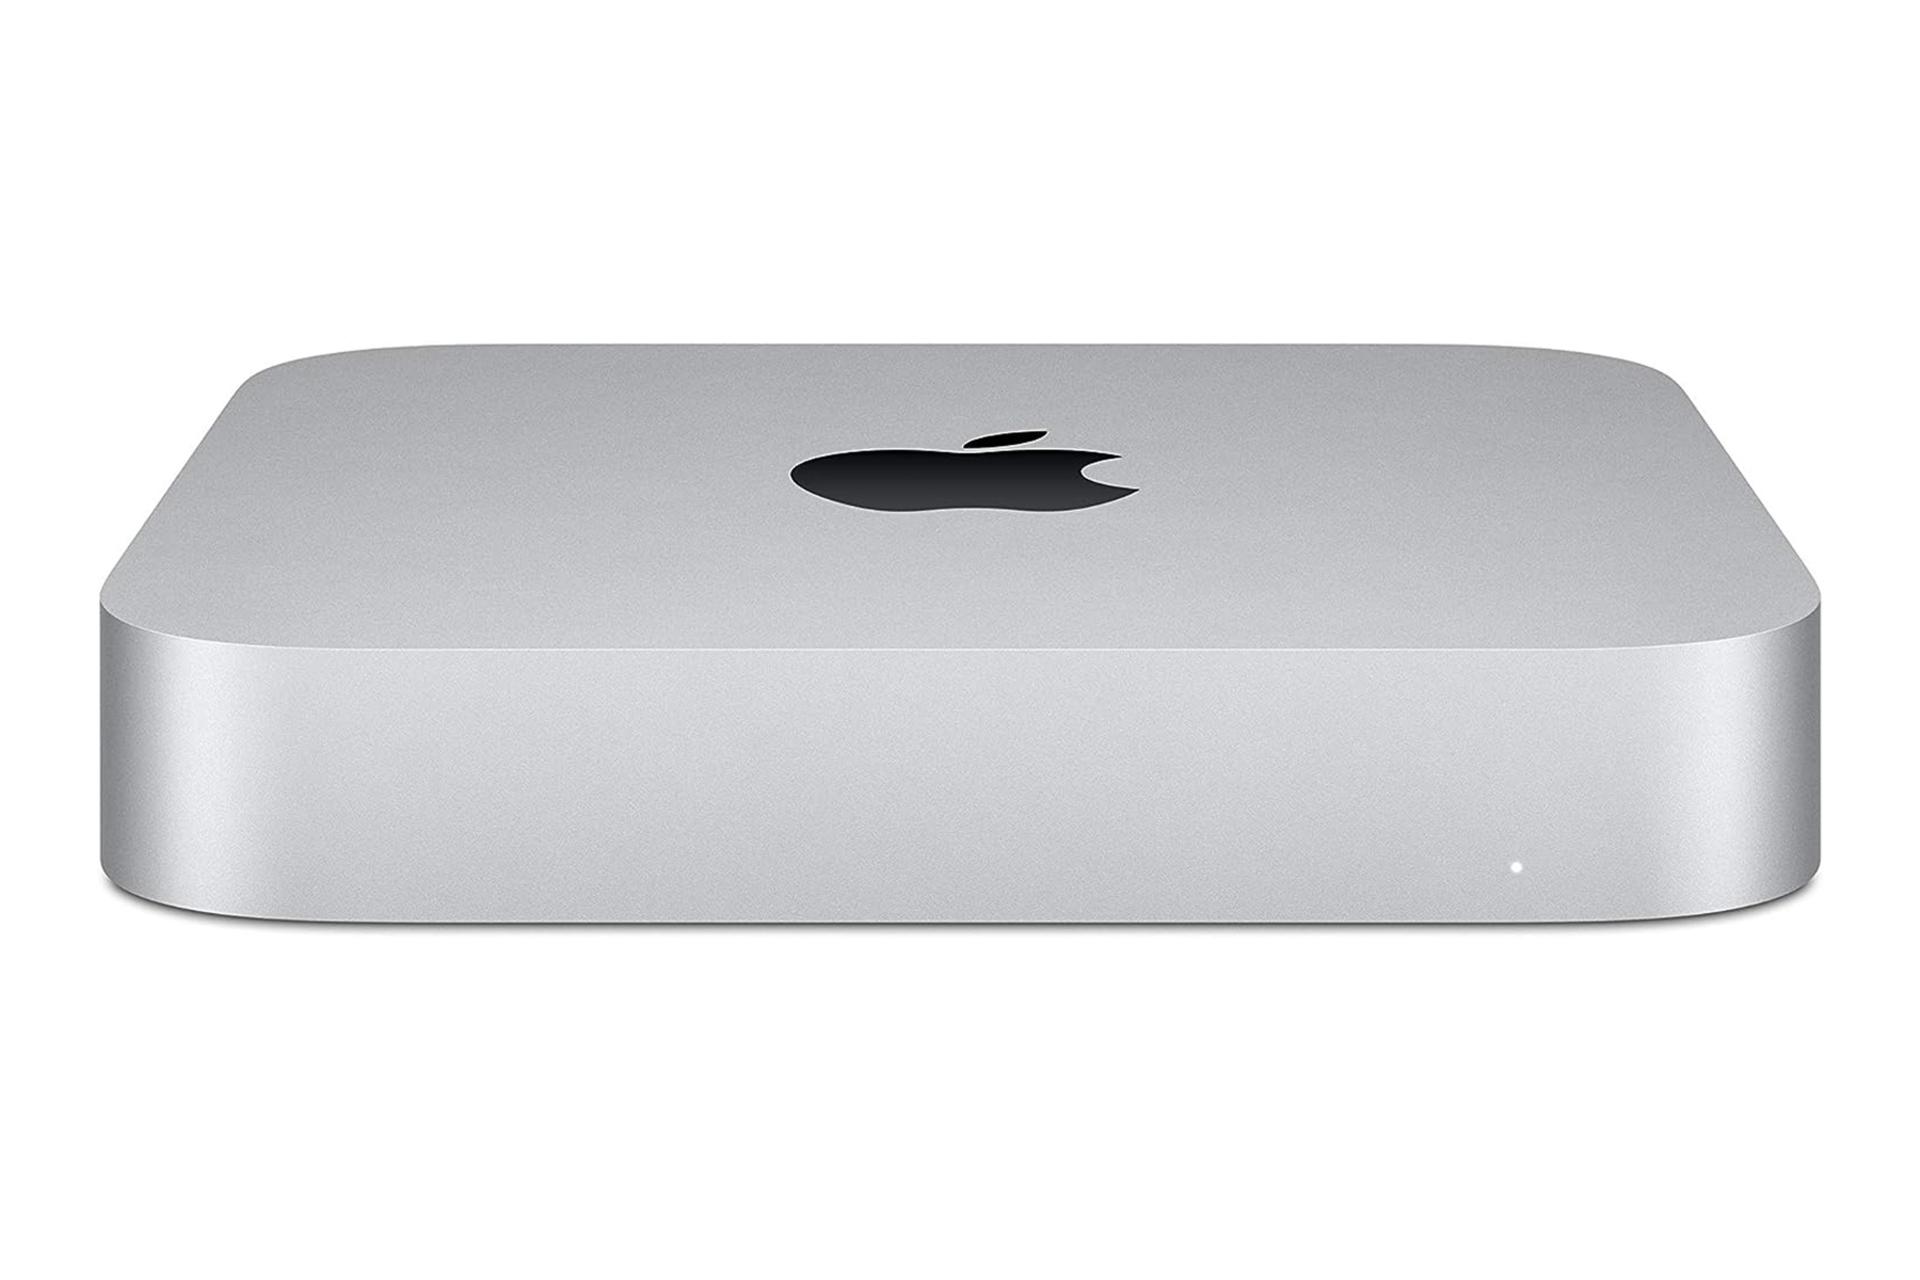 نمای جلوی کامپیوتر کوچک مک مینی مدل 2020 اپل / Apple Mac Mini 2020